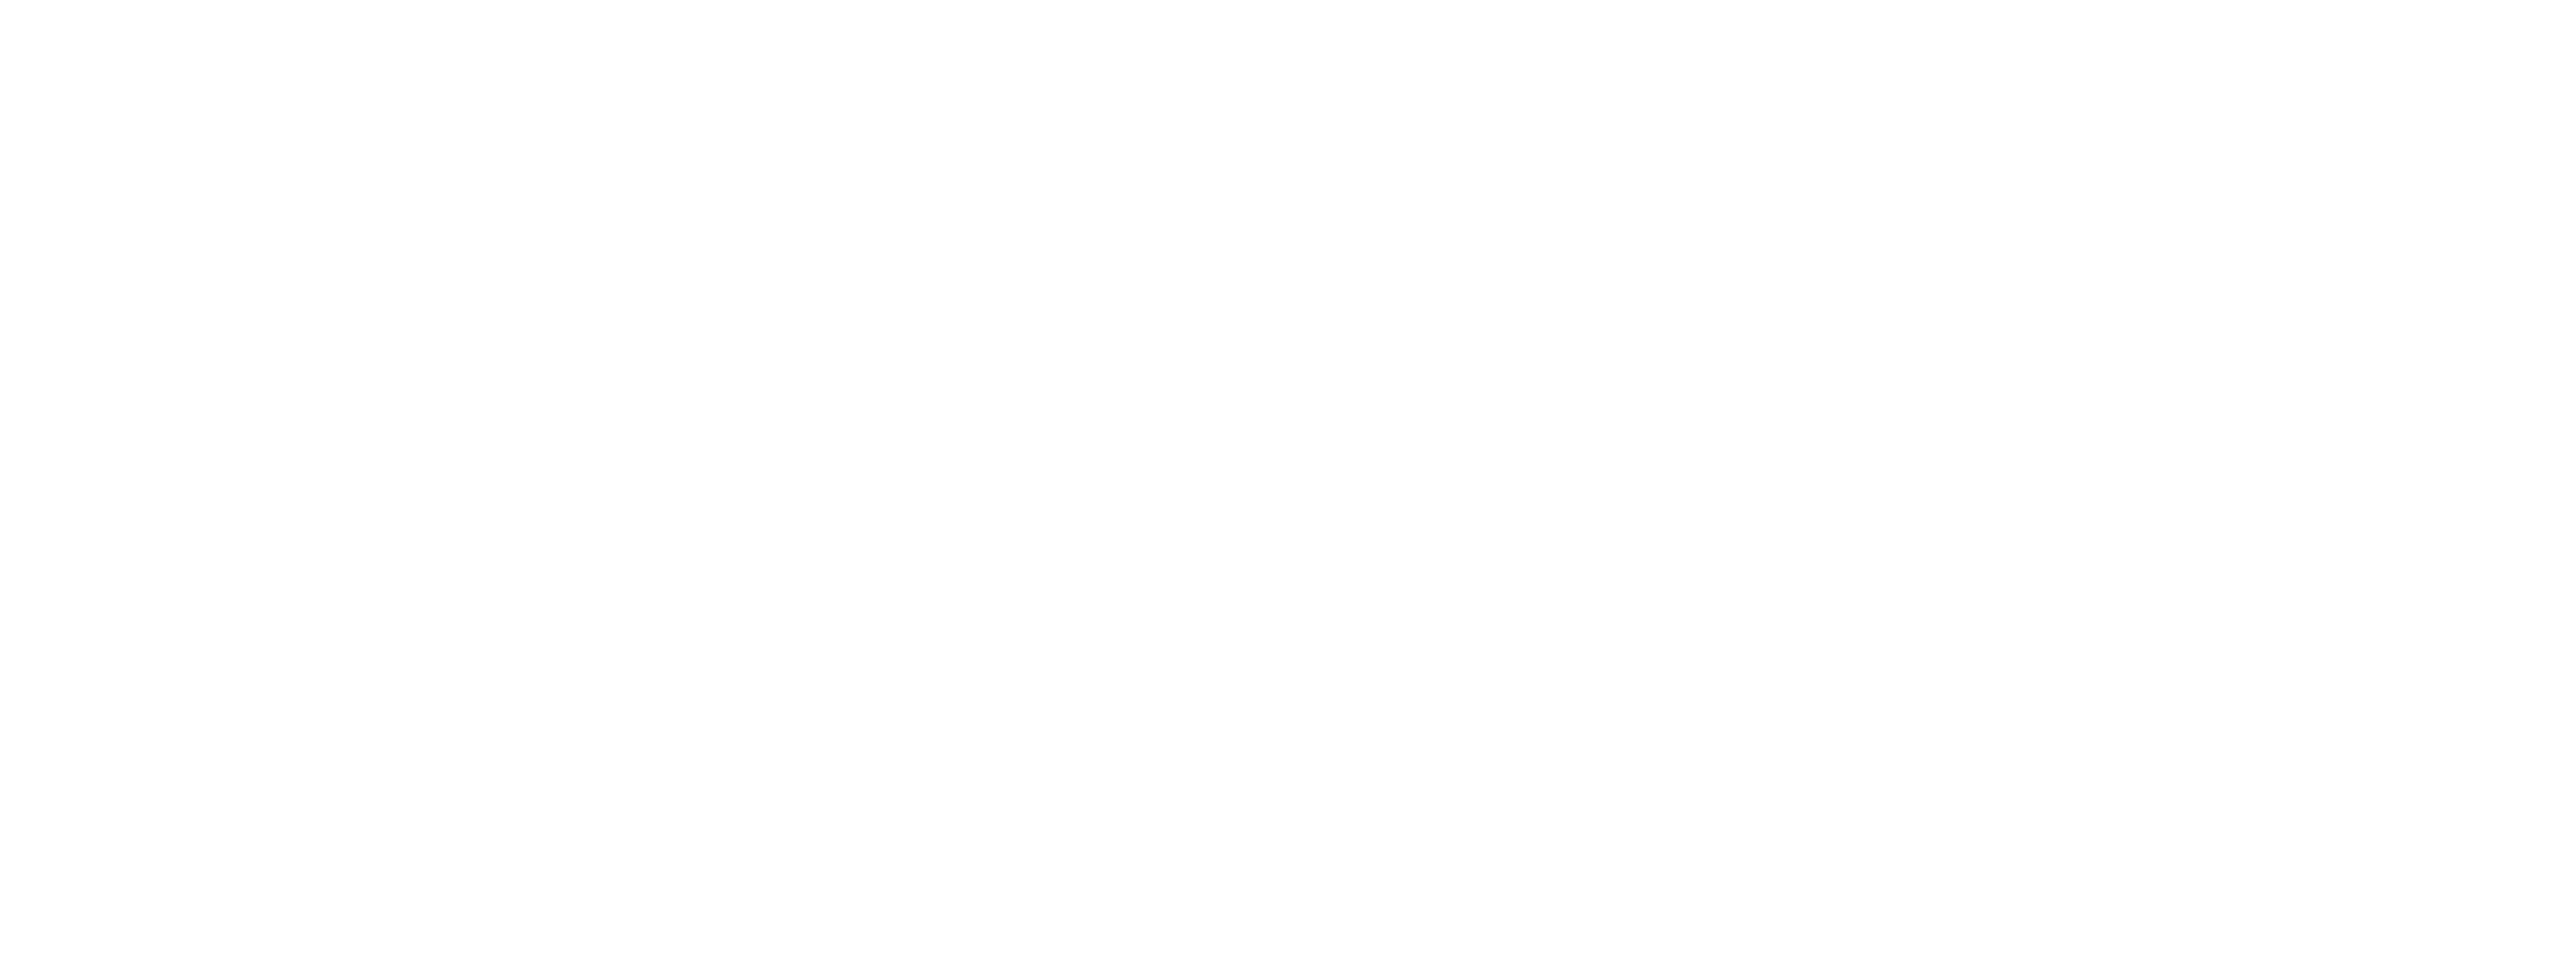 logo htx Giaphat-01